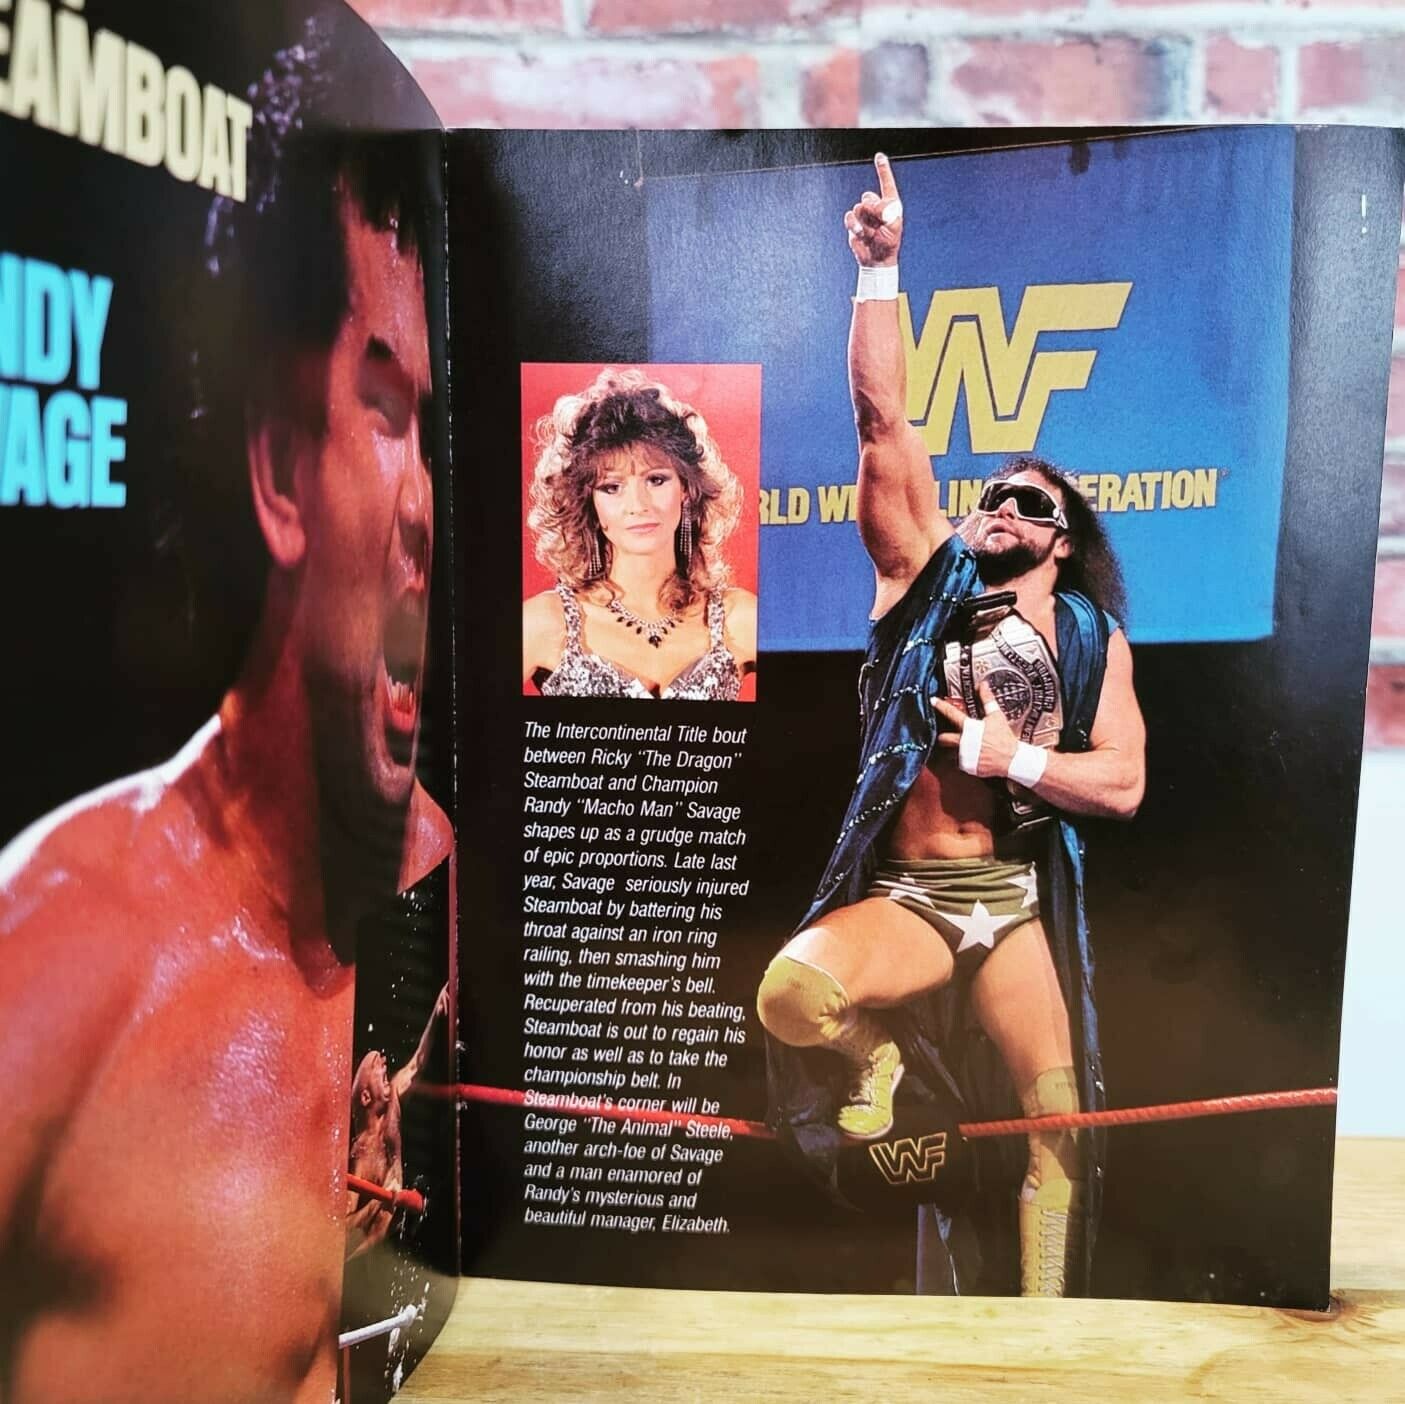 Original Wrestlemania III Event Program With Coliseum VHS WWF WWE Wrestling Lot